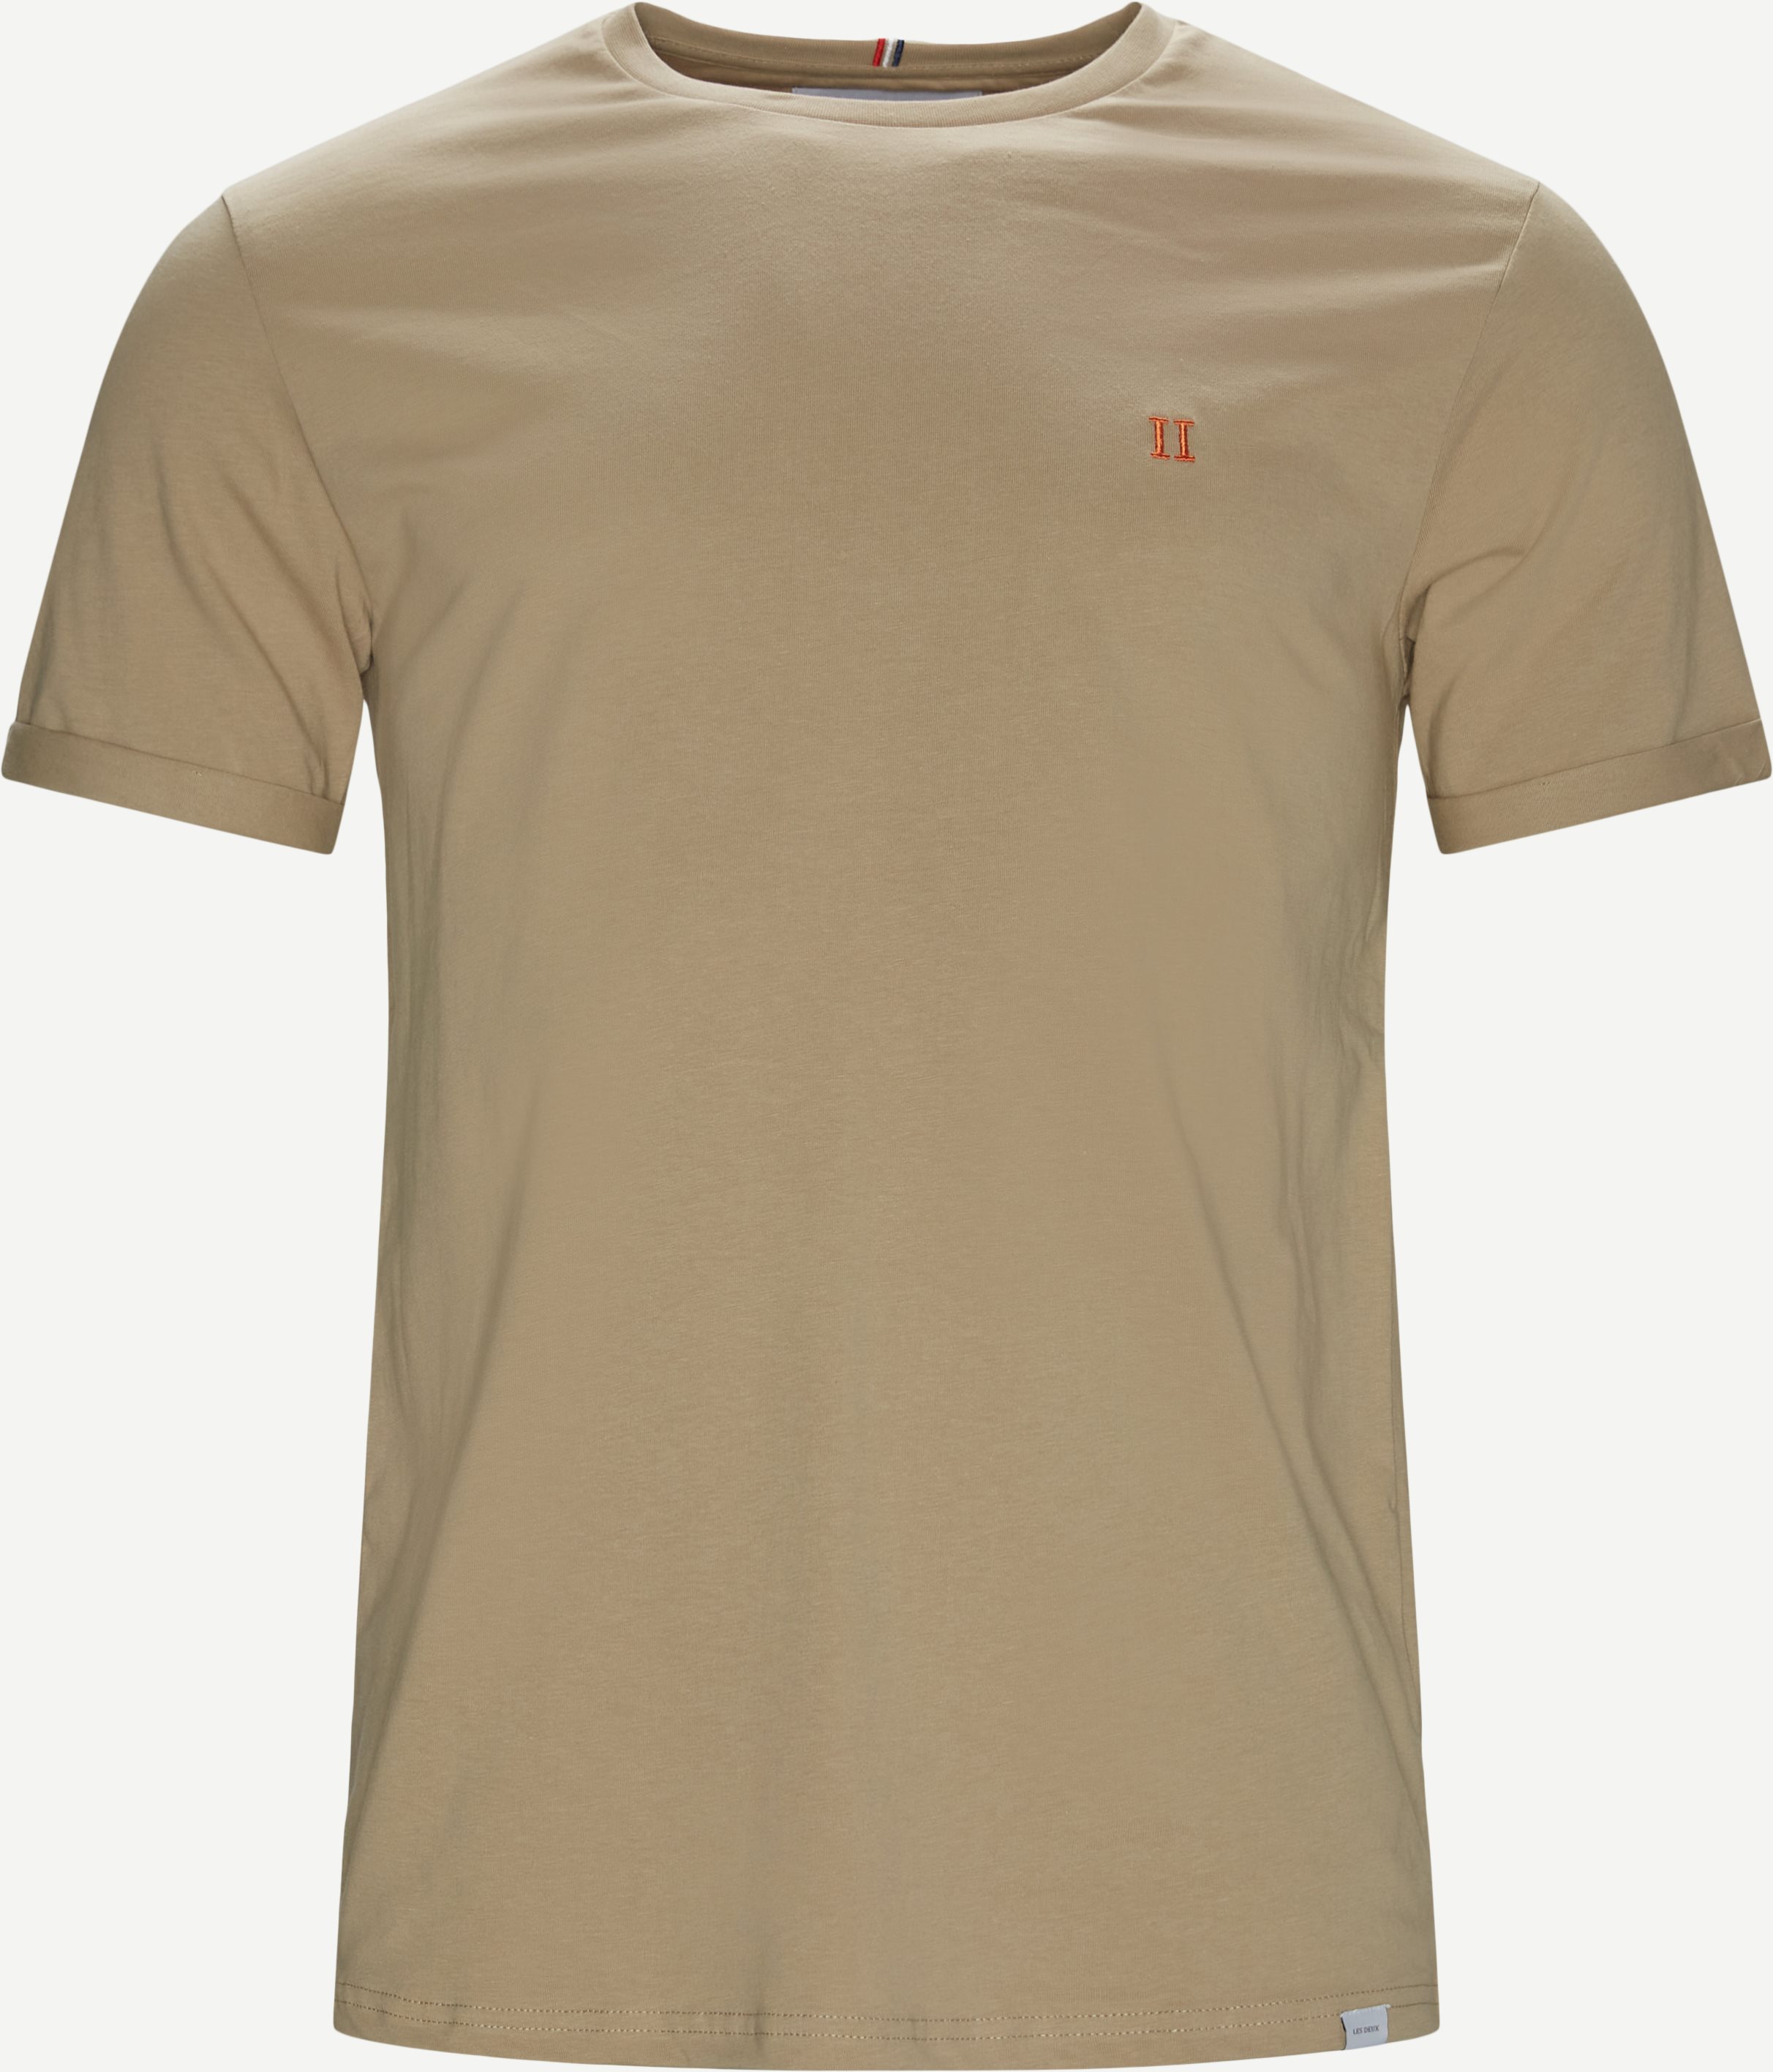 Nørregaard T-shirt - T-shirts - Regular fit - Sand